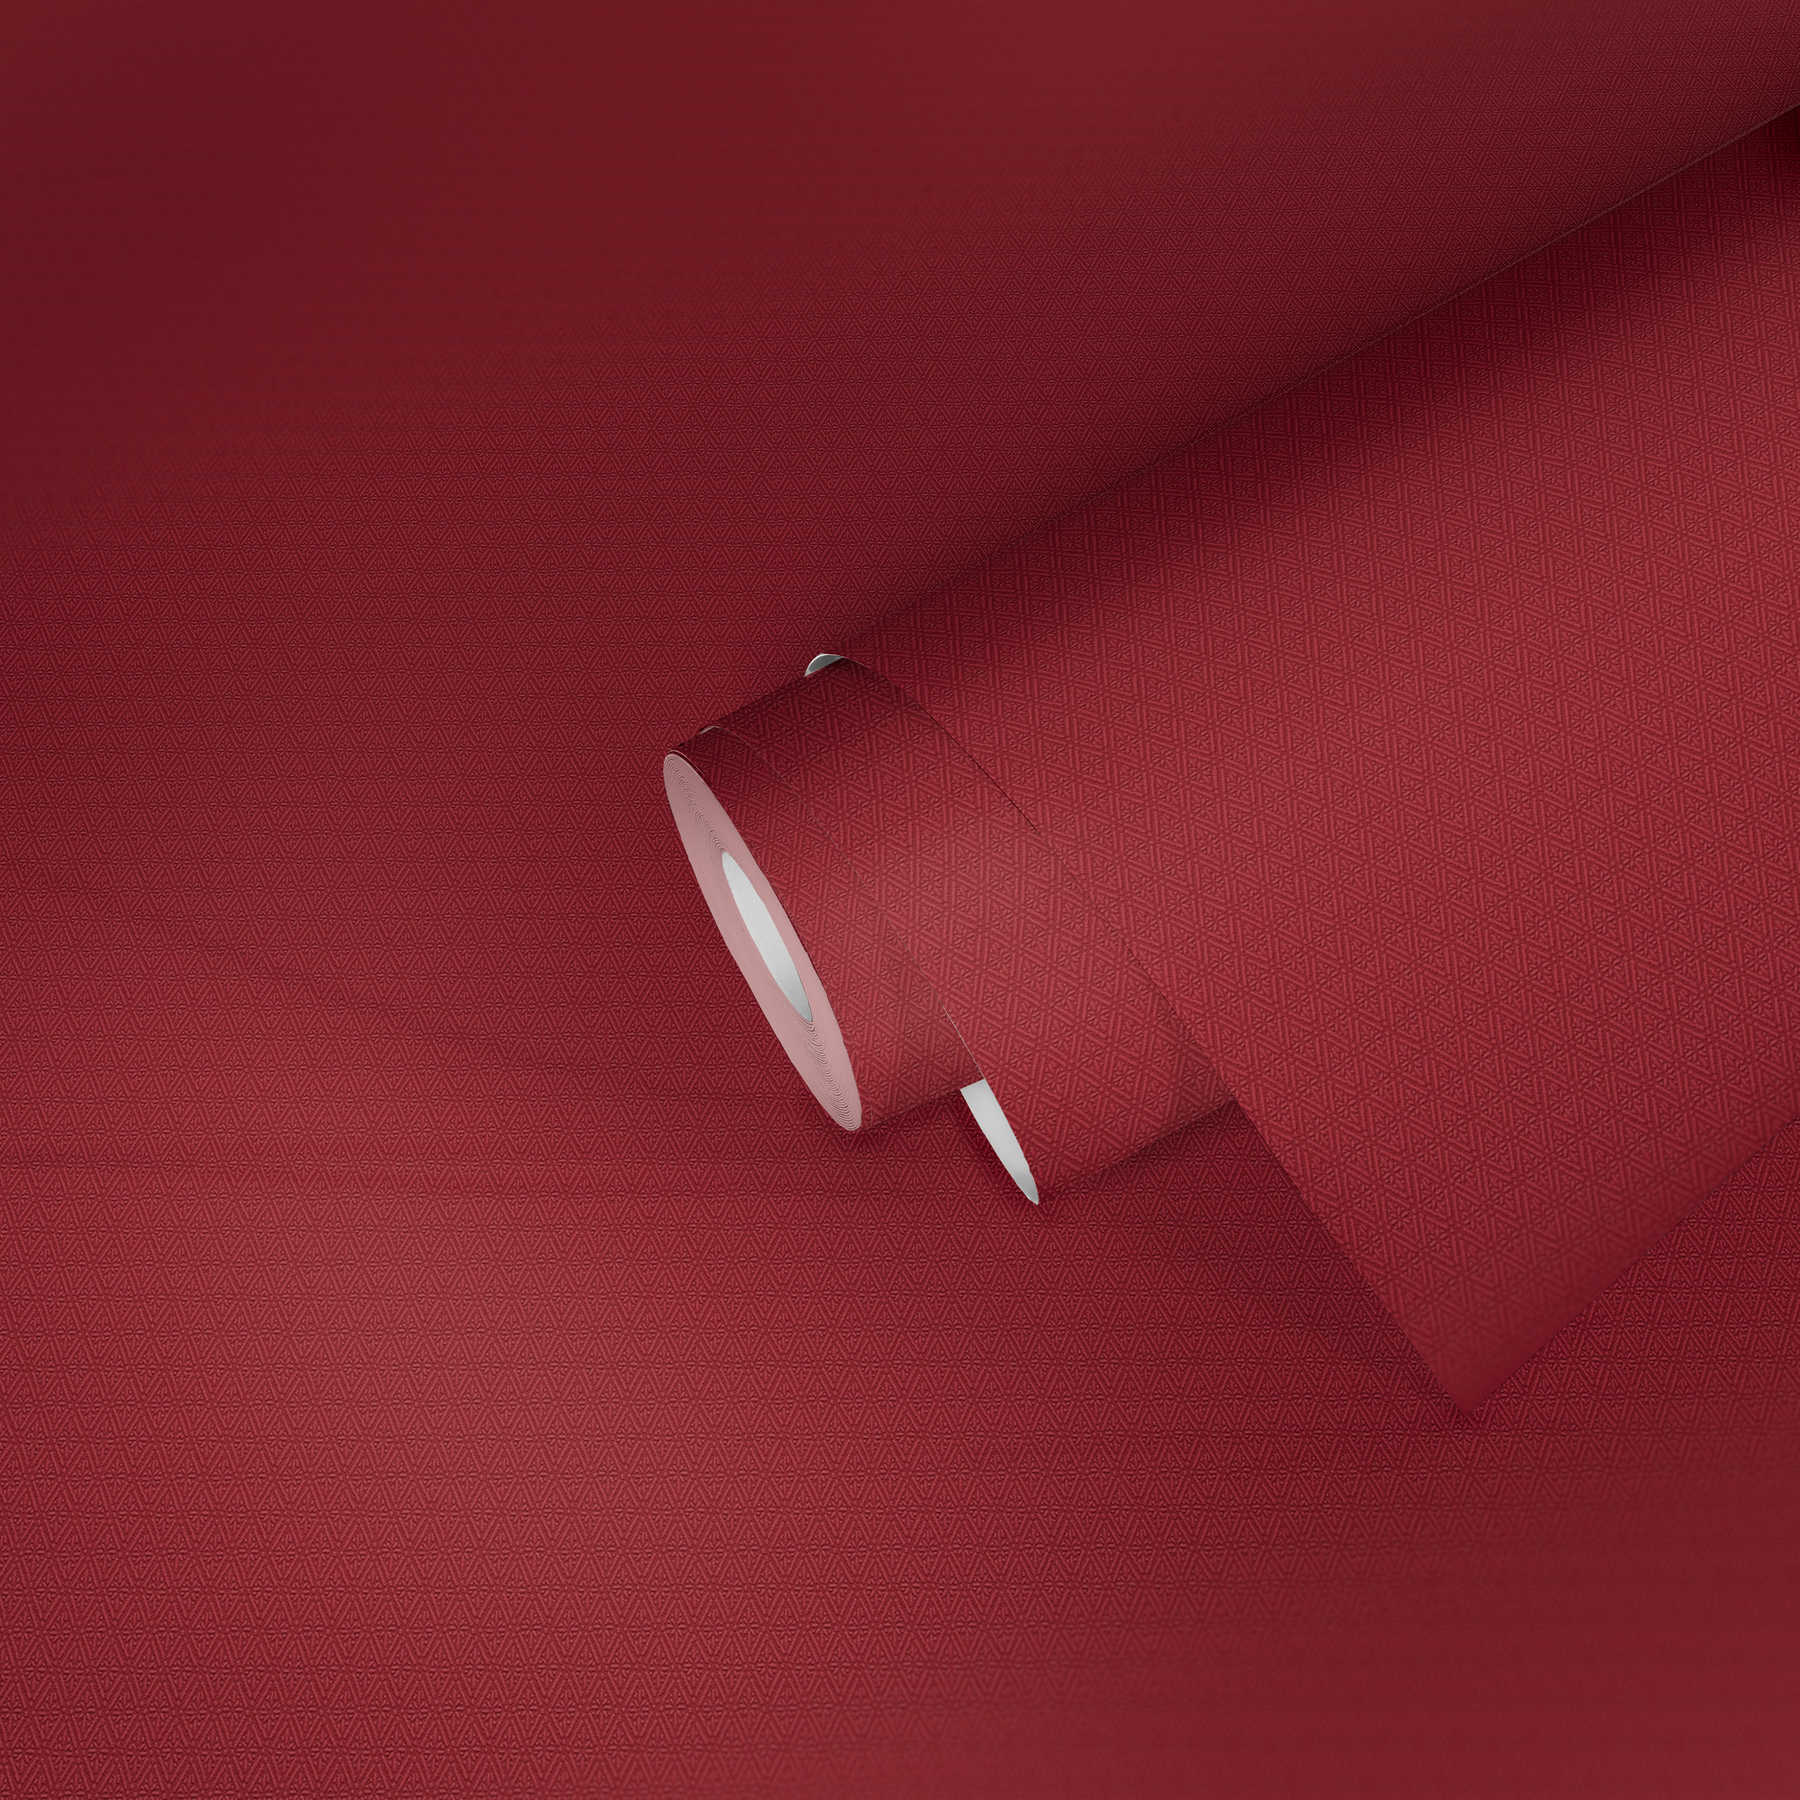             Unitapete mit Strukturmuster im Rauten-Design – Rot
        